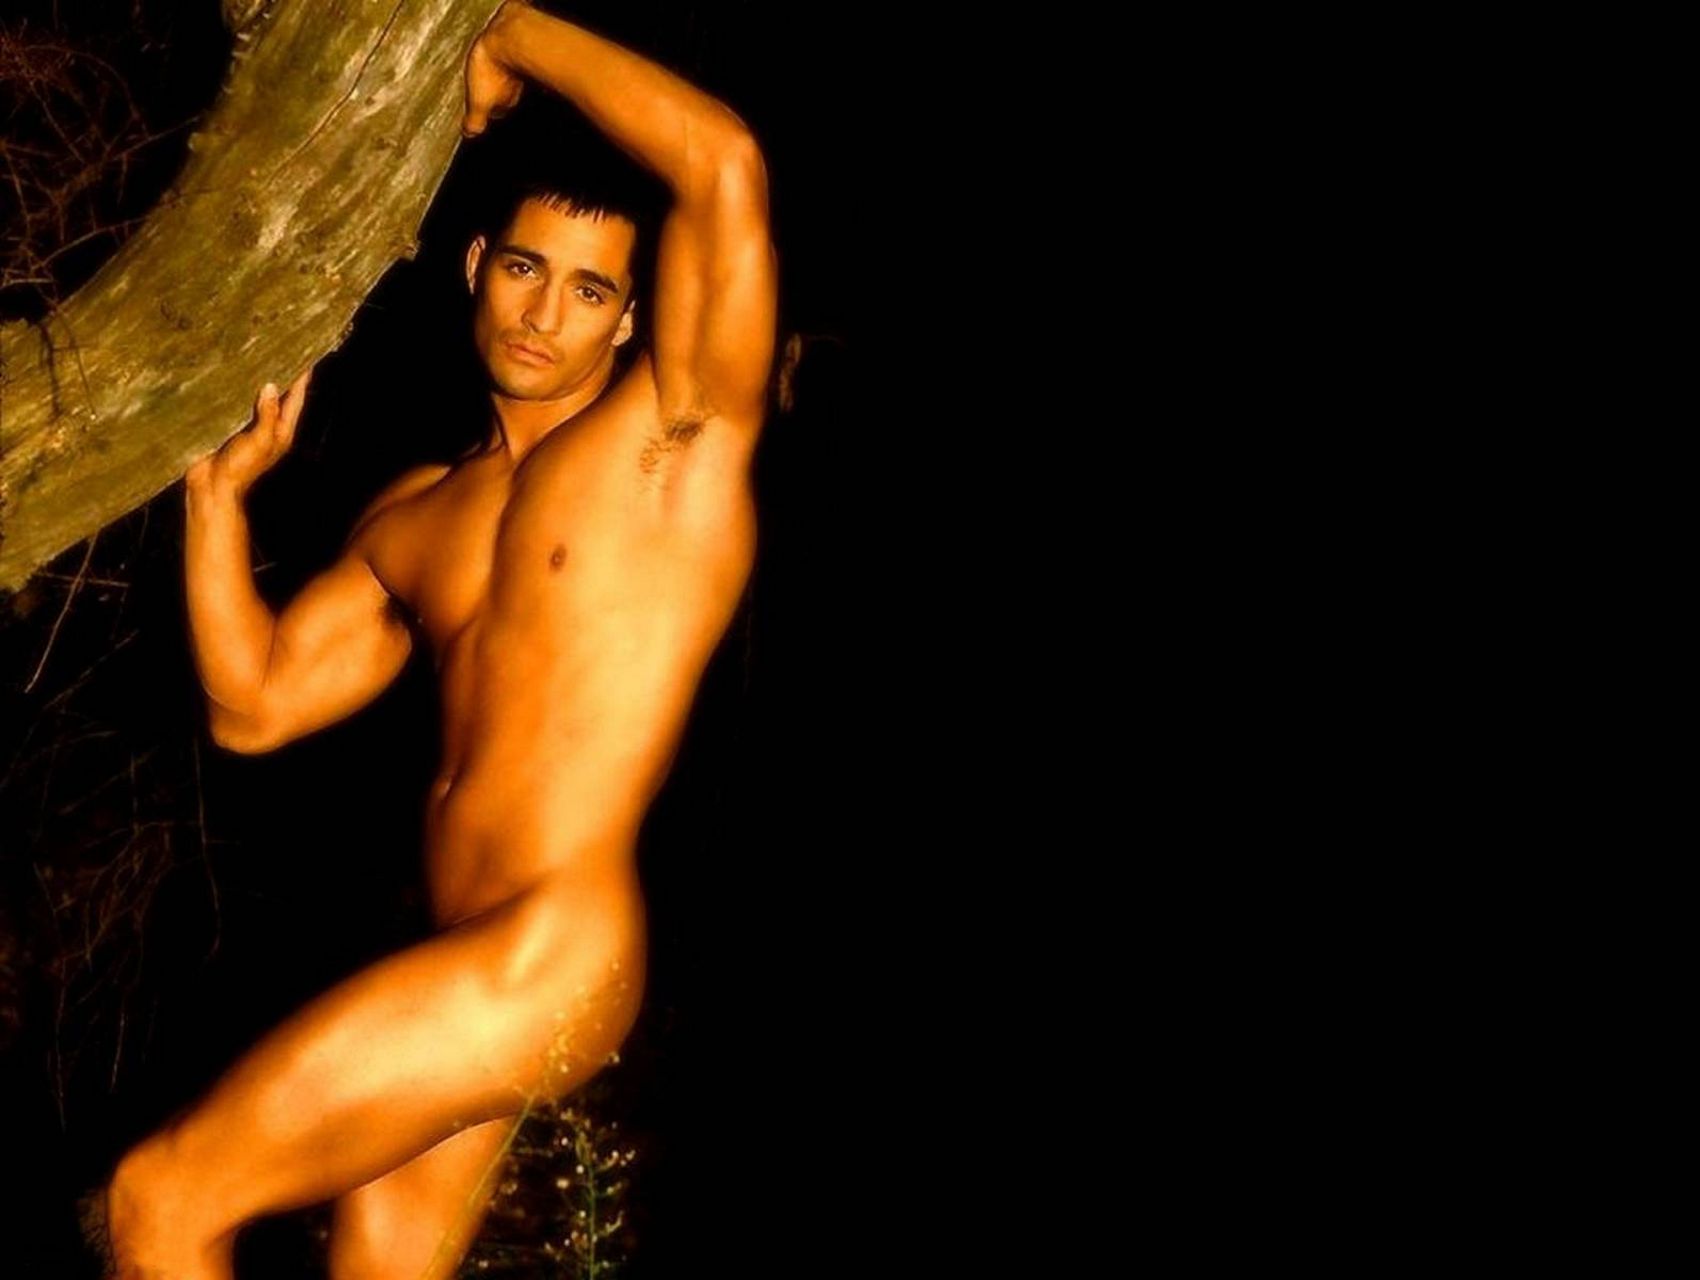 голый мужчина у дерева на черном фоне, фото красивого мужчины